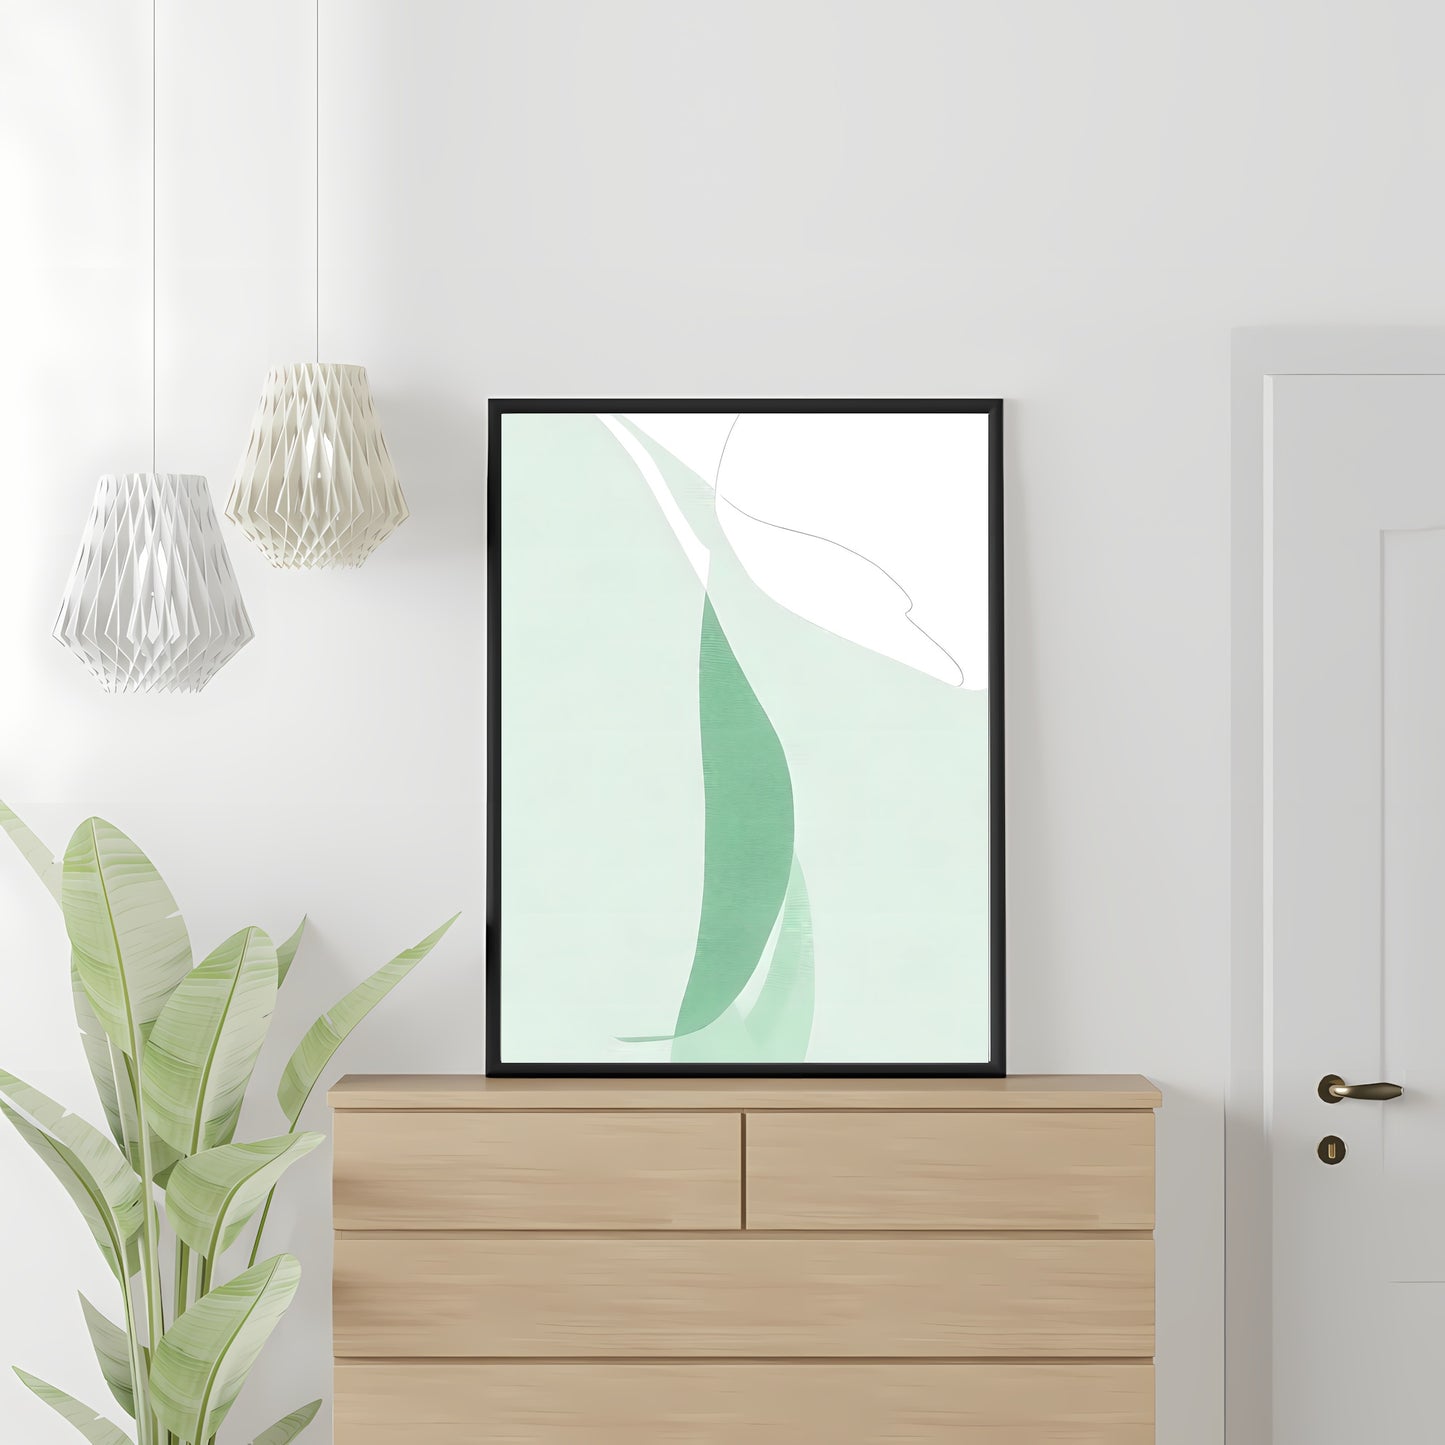 Abstract wall art green white modern minimalist artprint bedroom decor neutral tones Paper Poster Print